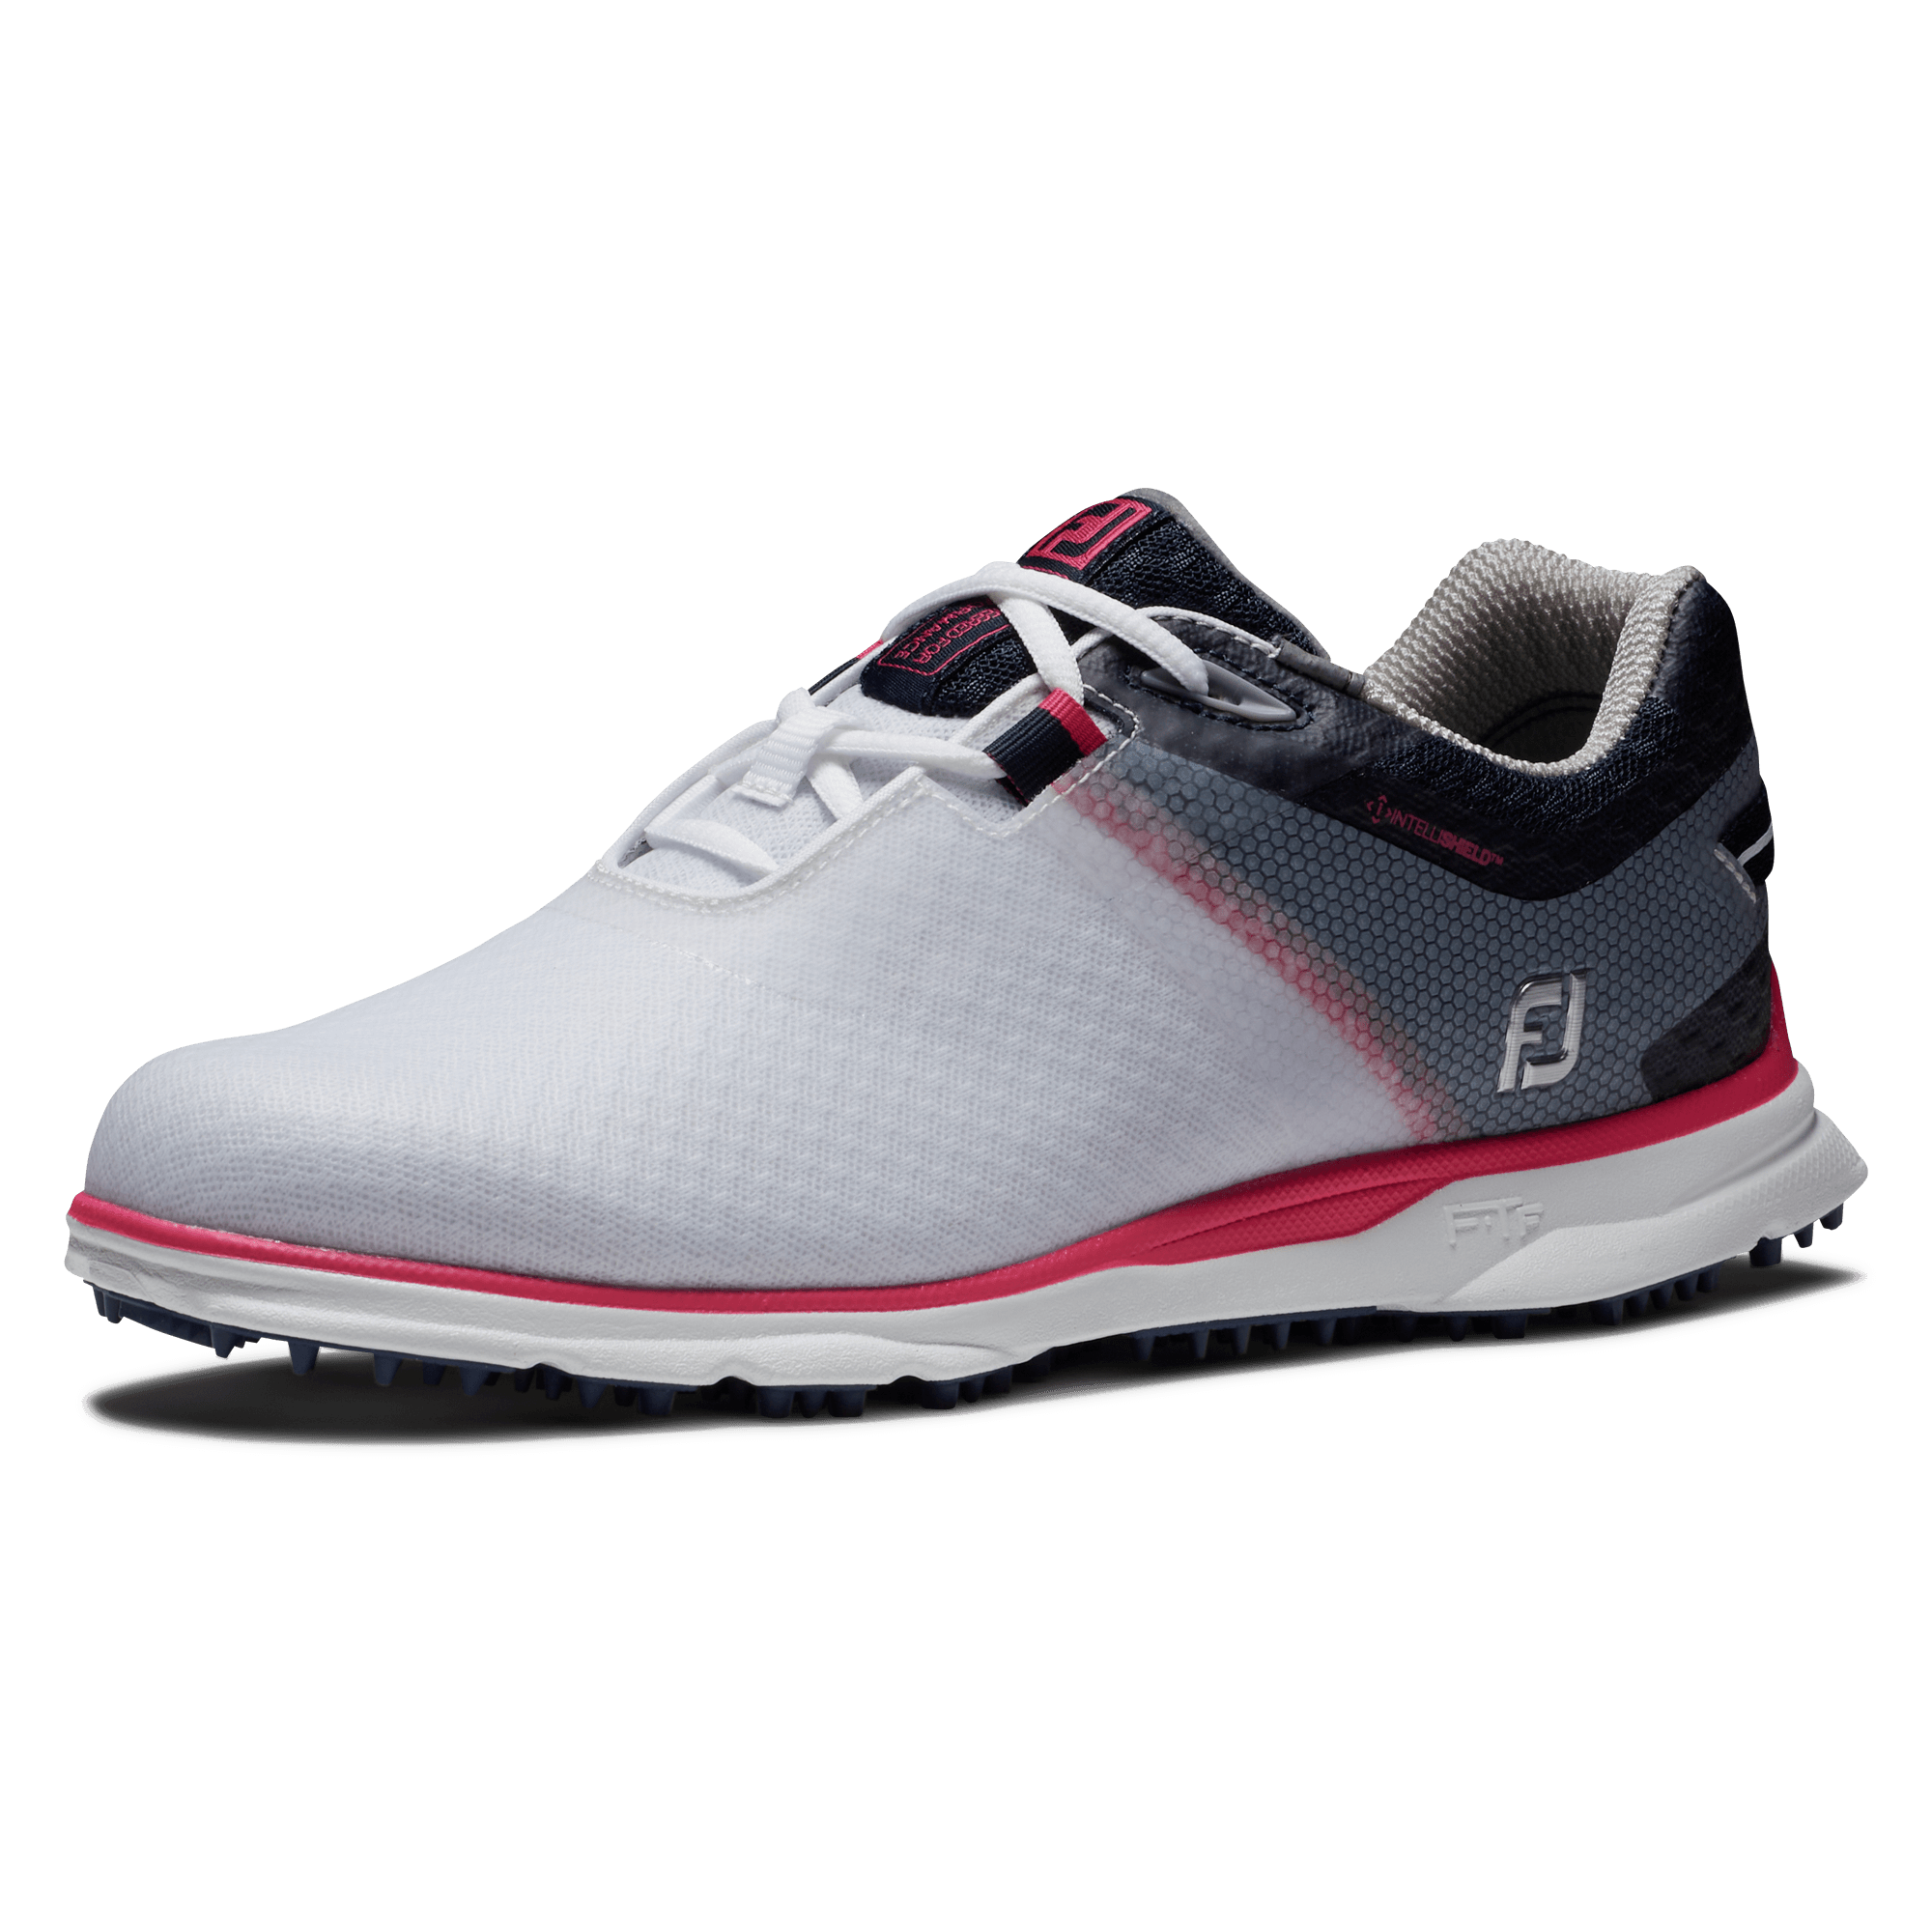 FootJoy Pro SL Sport Ladies Golf Shoes #98147 White/Navy/Hot Pink ...